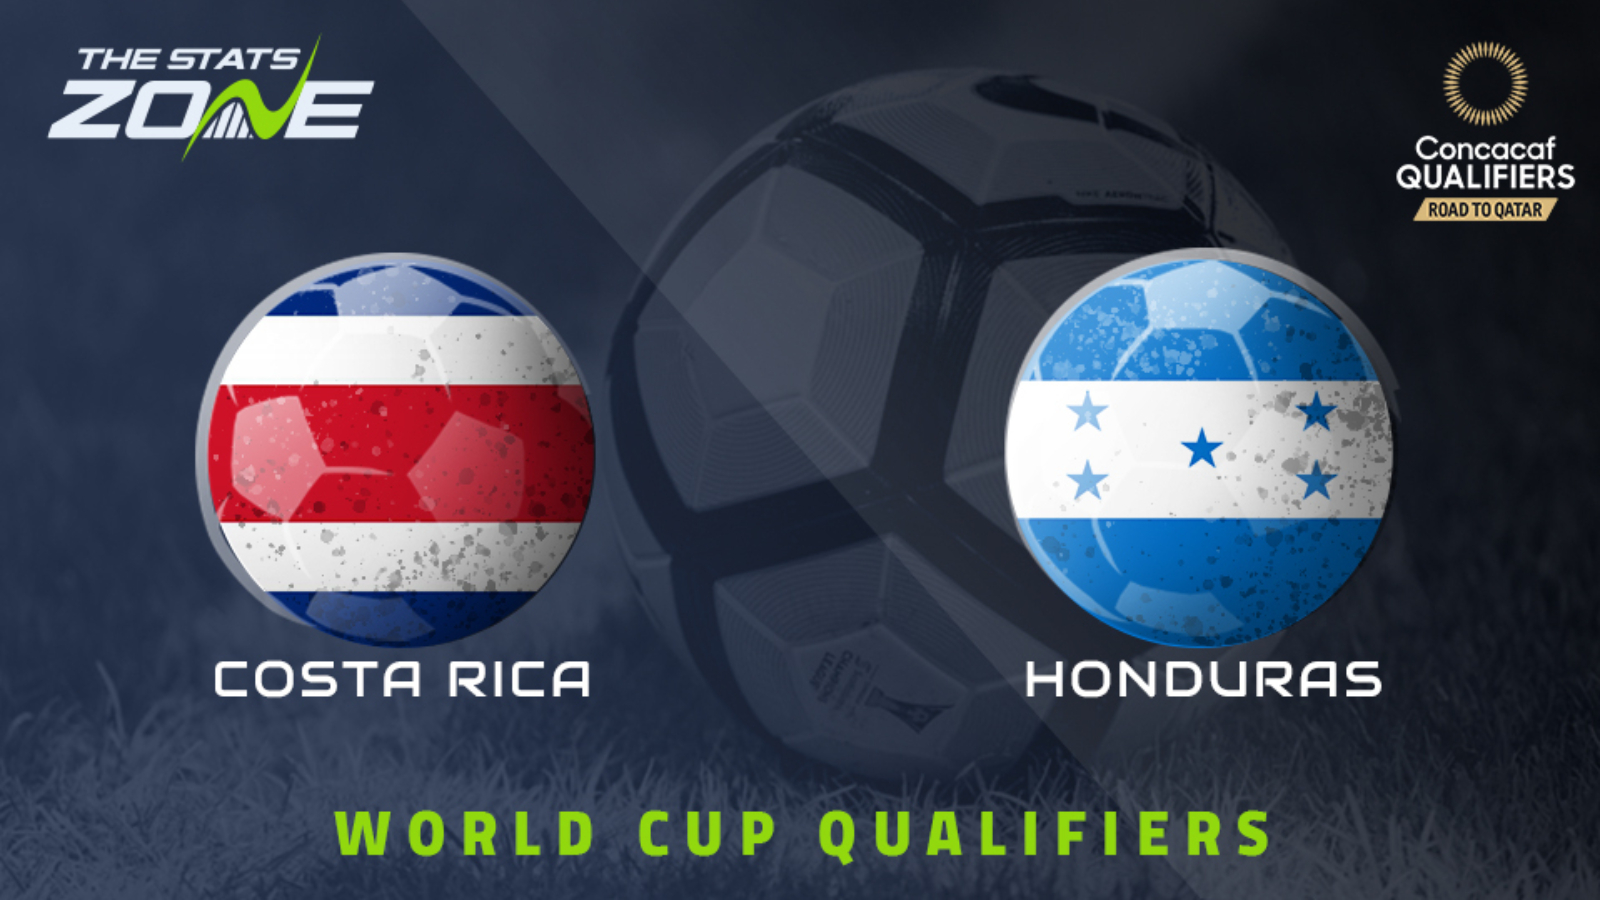 FIFA World Cup 2022 CONCACAF Qualifiers Costa Rica vs Honduras